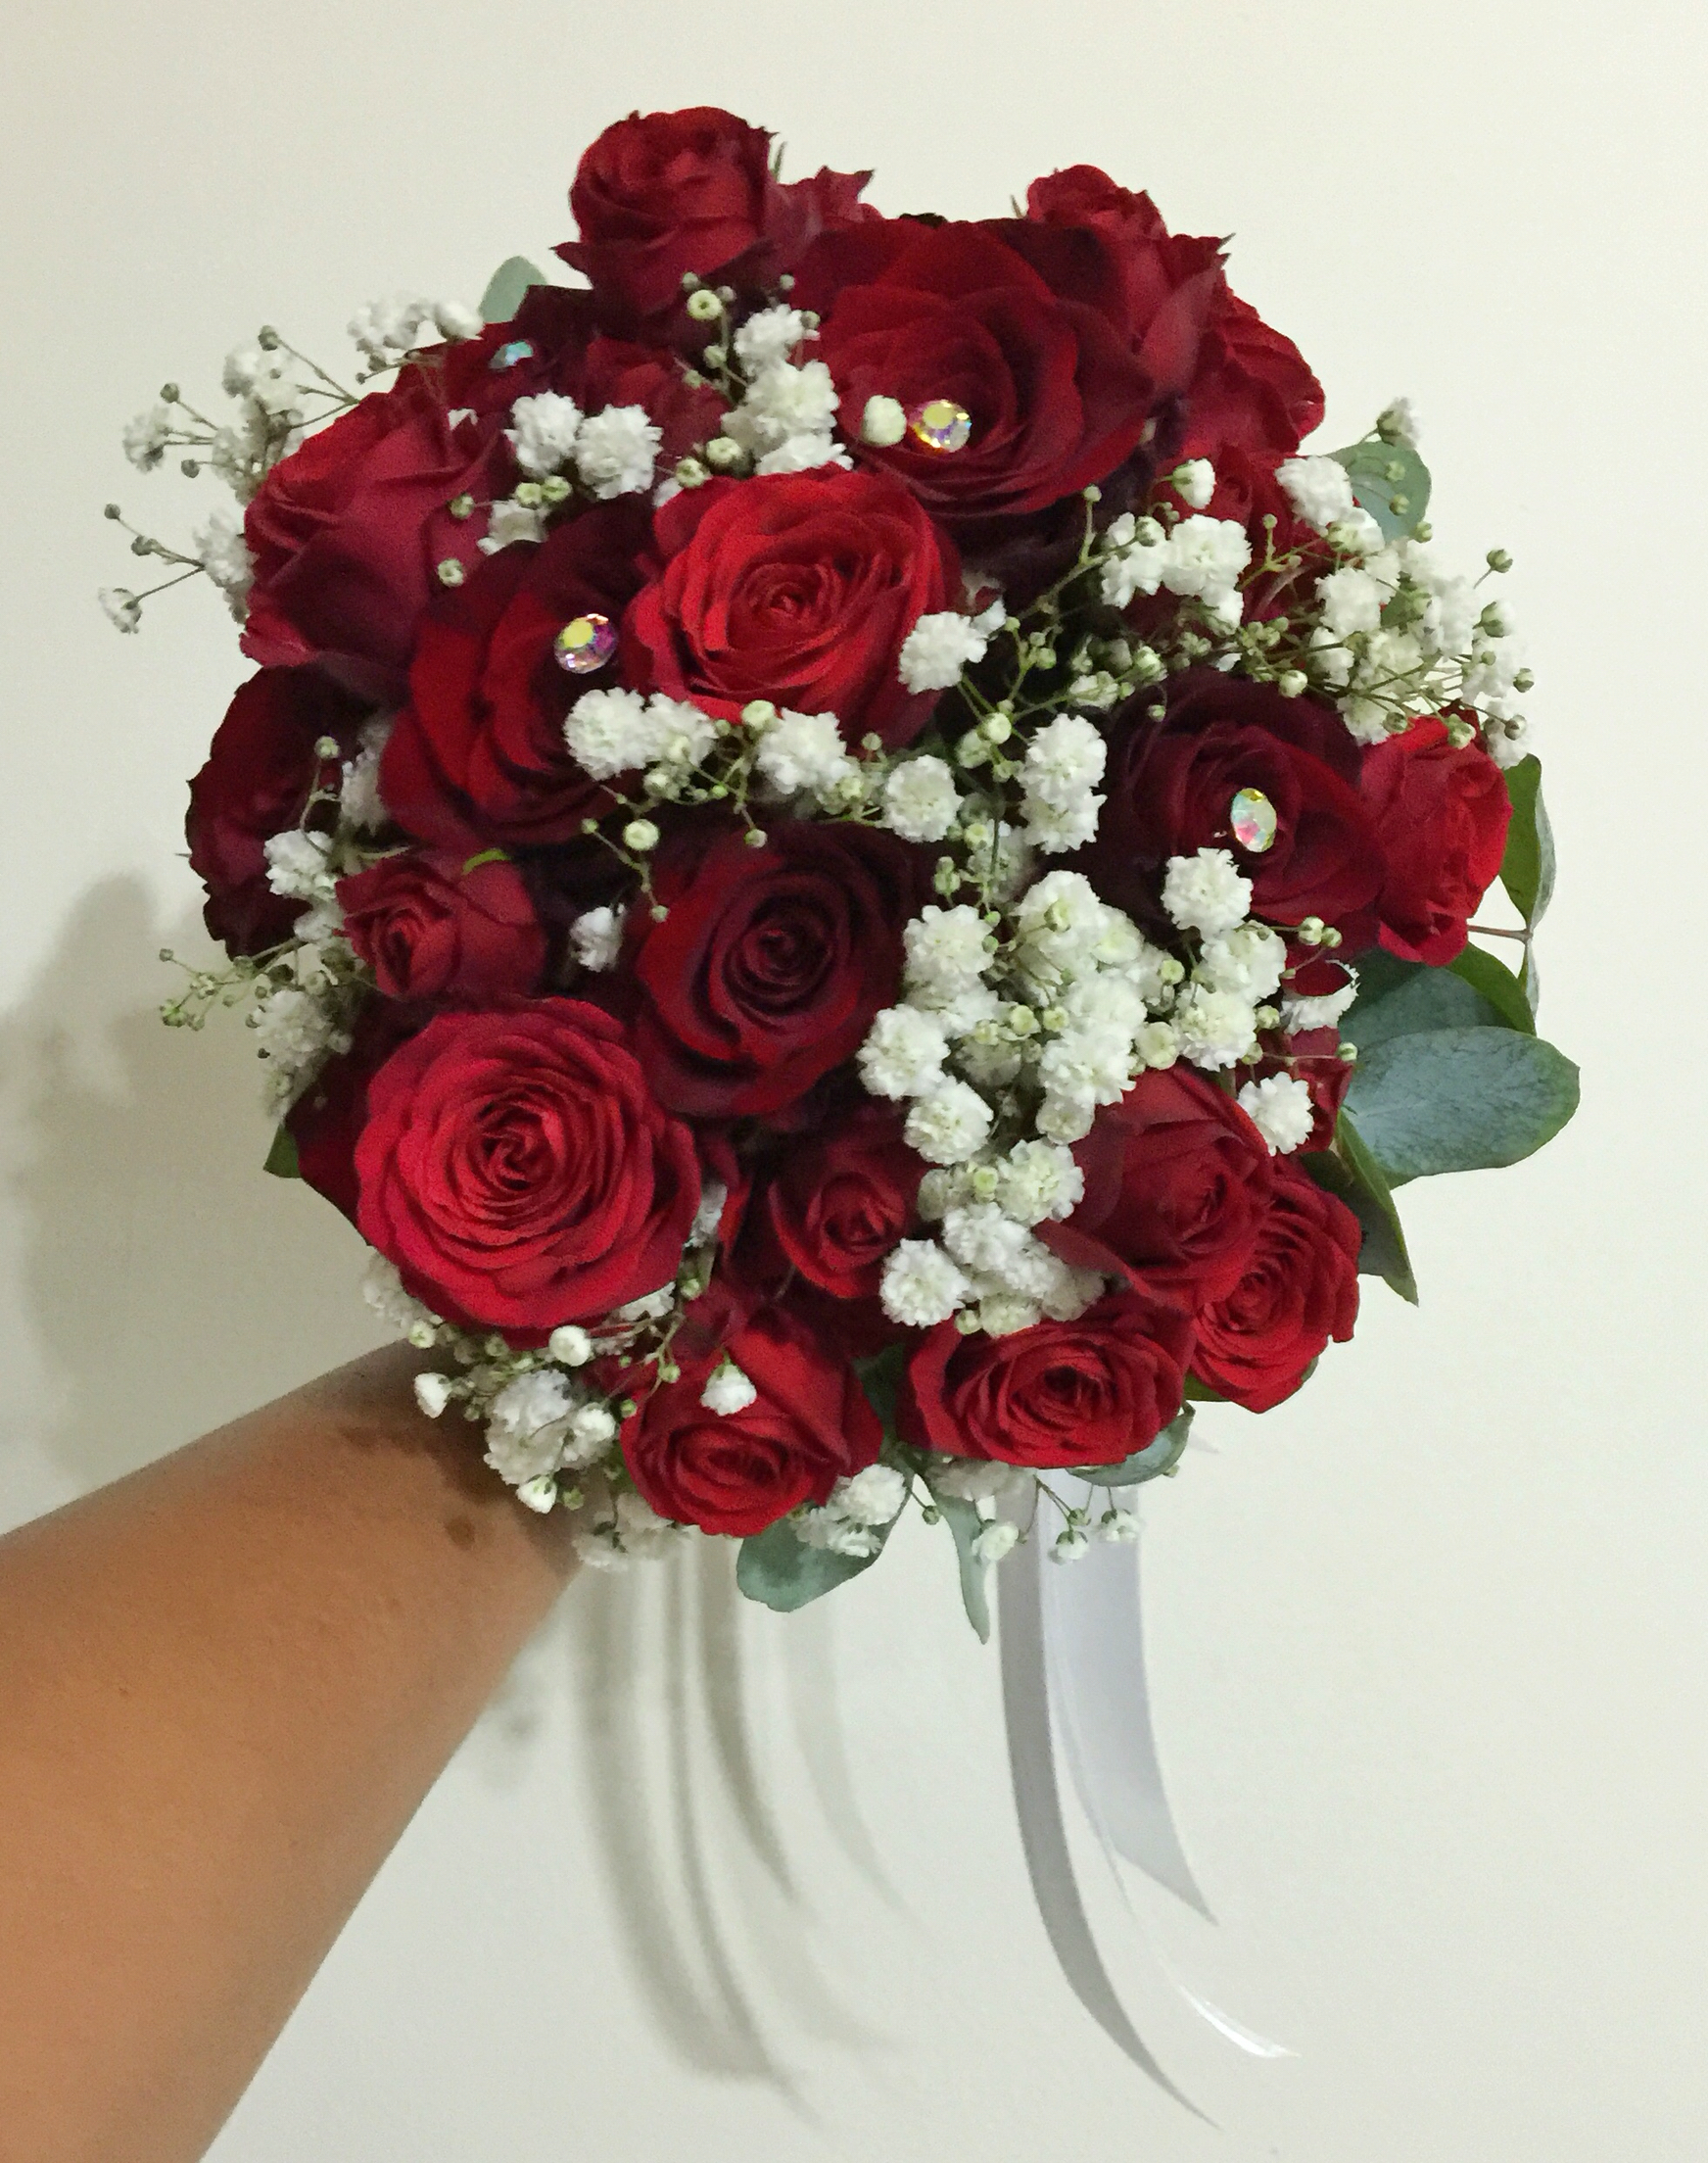 Pin by myReika on myReika | Pinterest | Red roses, Bridal bouquets ...